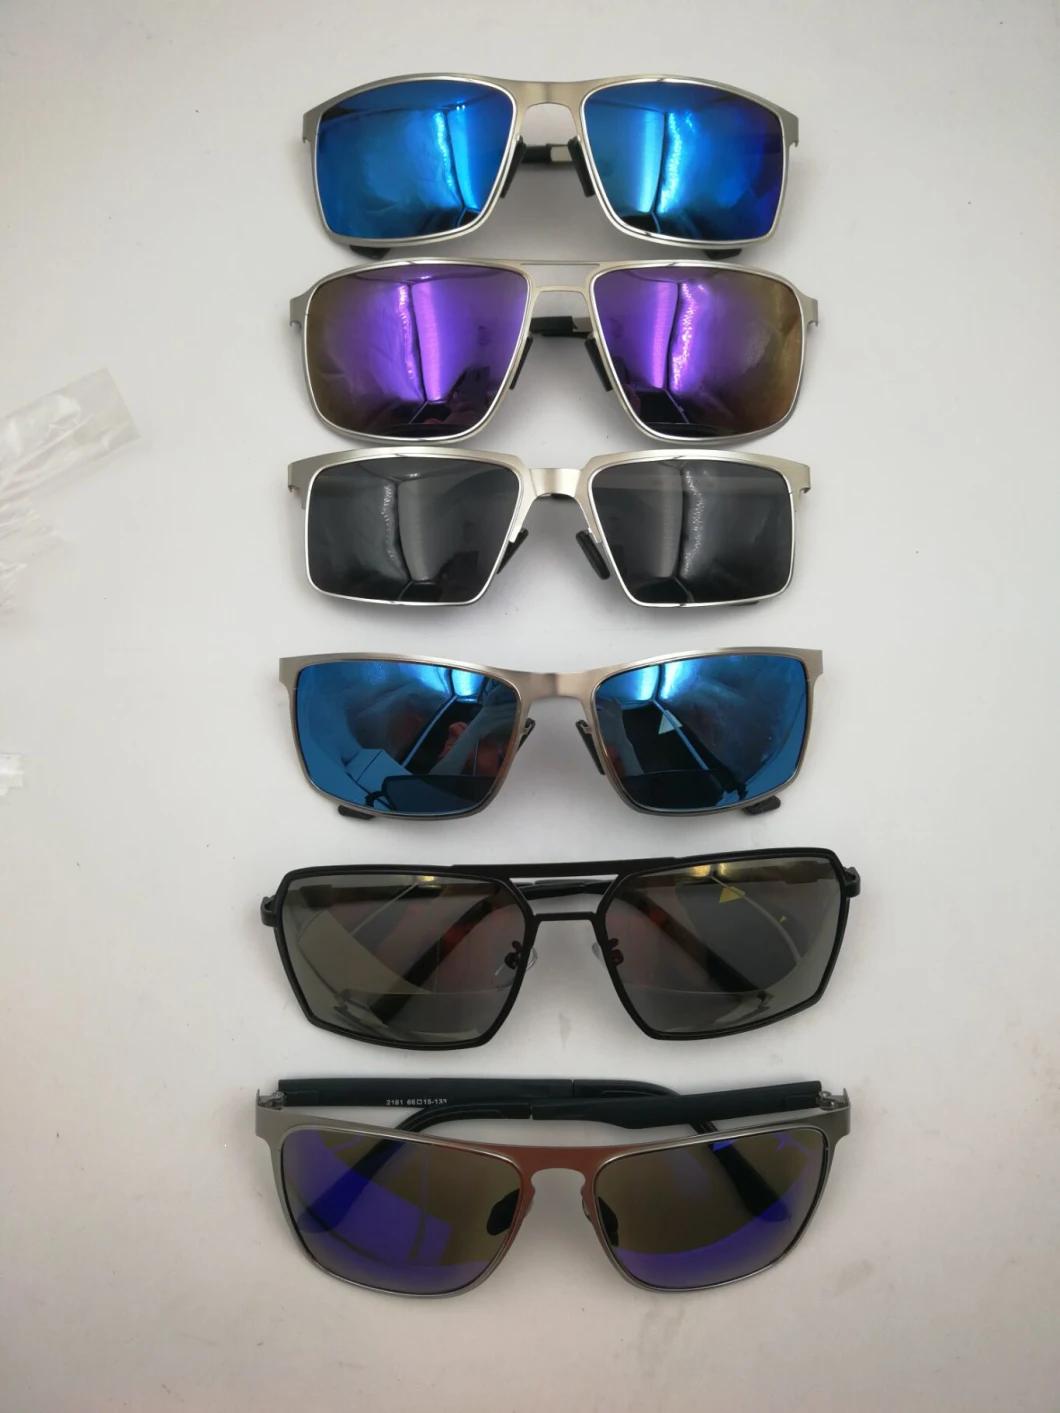  Sunglasses Ready Goods Ready Sunglasses Stock Sunglasses Ks3025